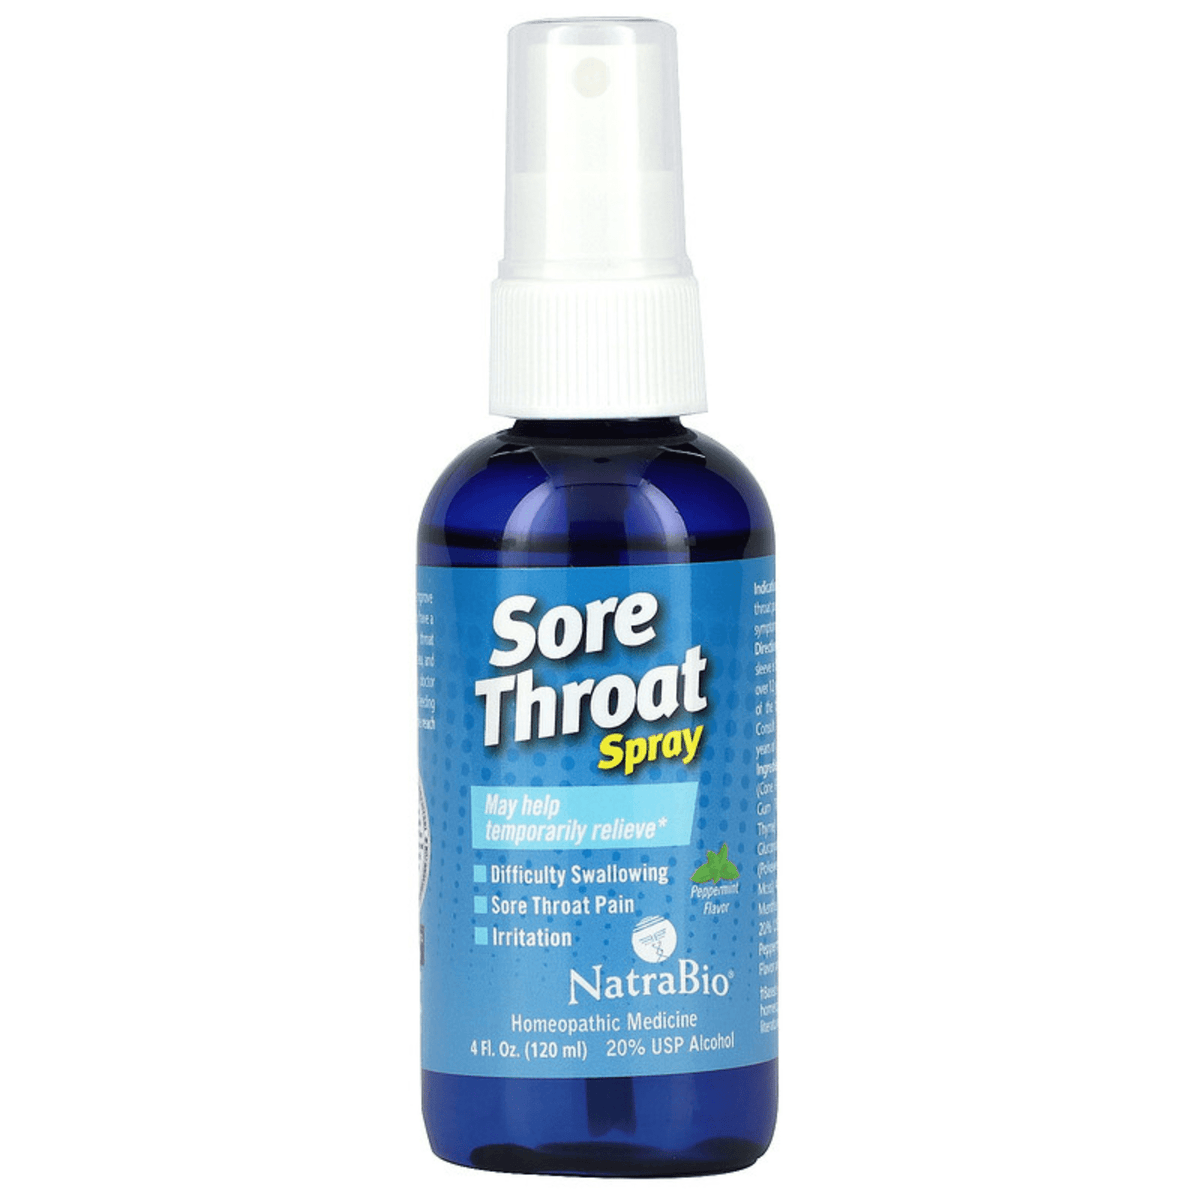 Primary Image of Sore Throat Spray